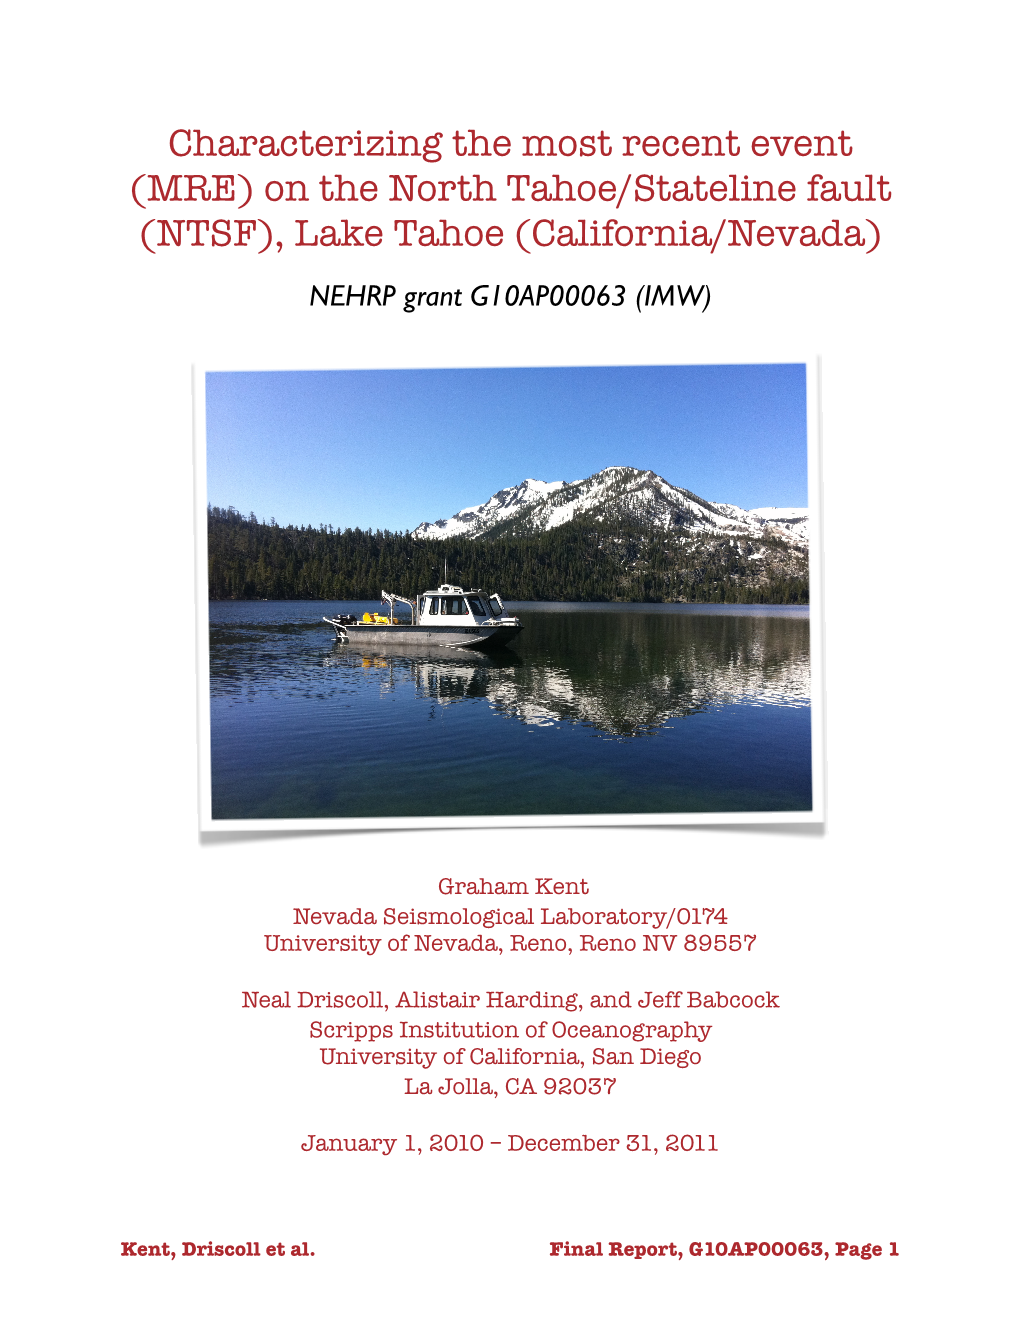 MRE) on the North Tahoe/Stateline Fault (NTSF), Lake Tahoe (California/Nevada) NEHRP Grant G10AP00063 (IMW